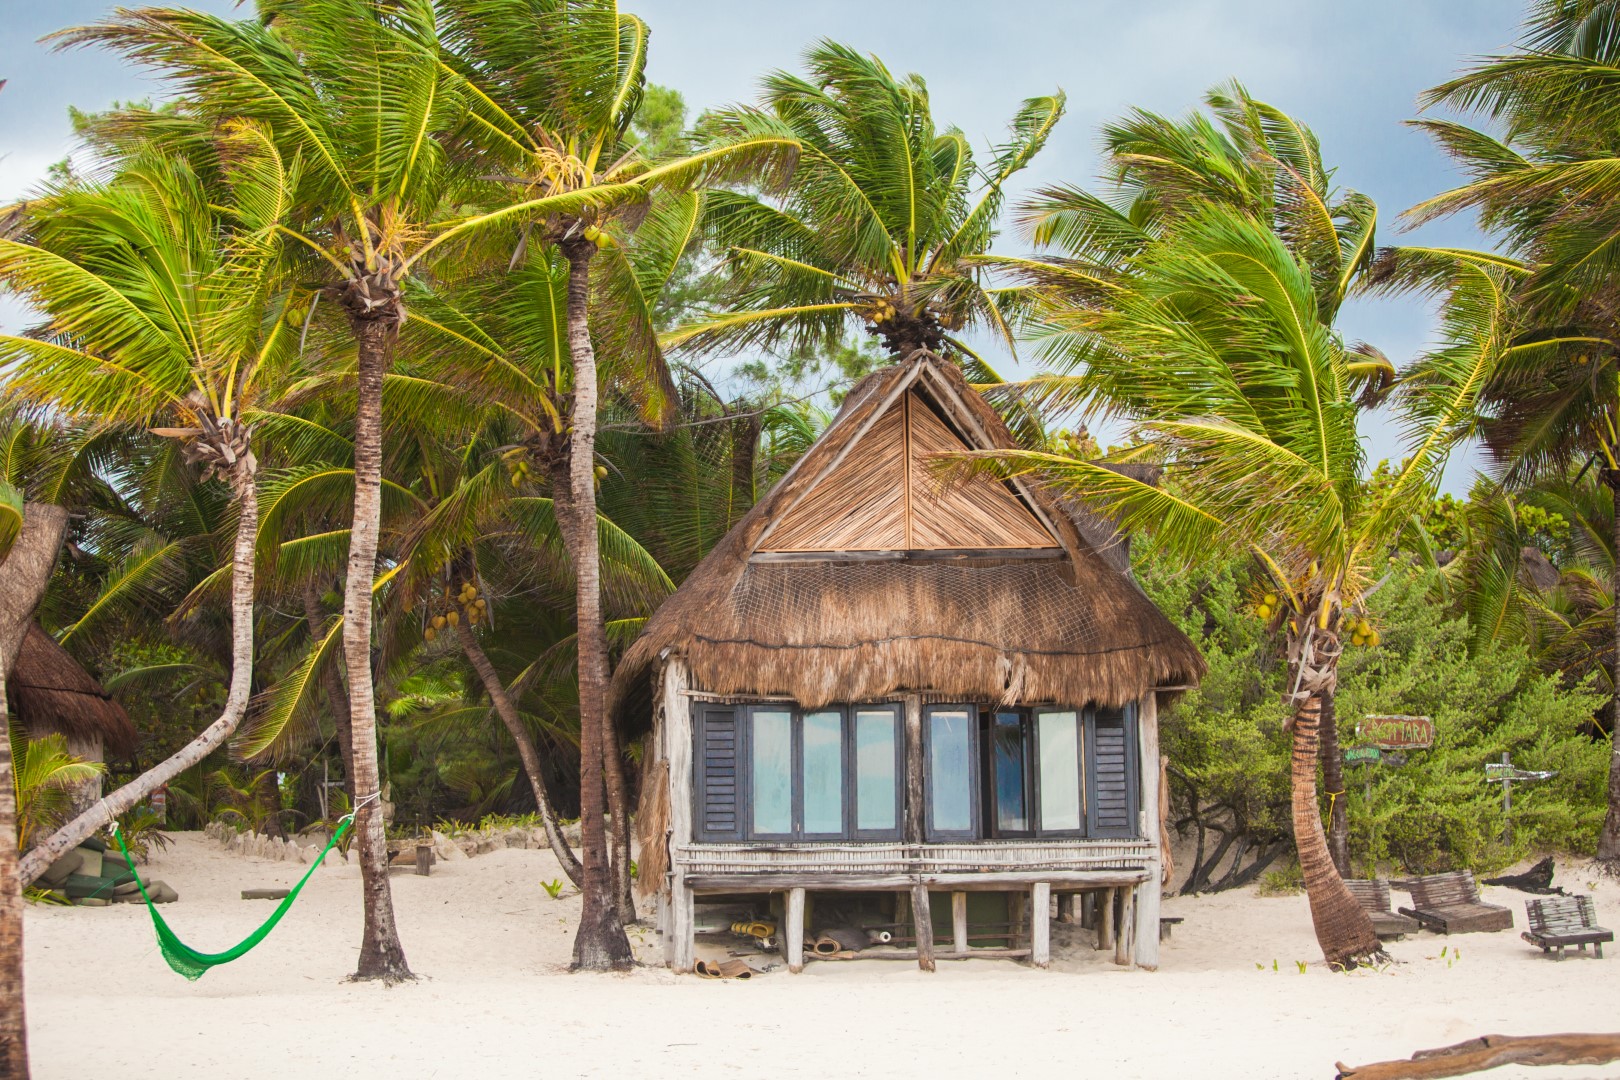 Tropical Beach House On Ocean Shore Among Palm Tre 2021 08 27 09 44 11 Utc